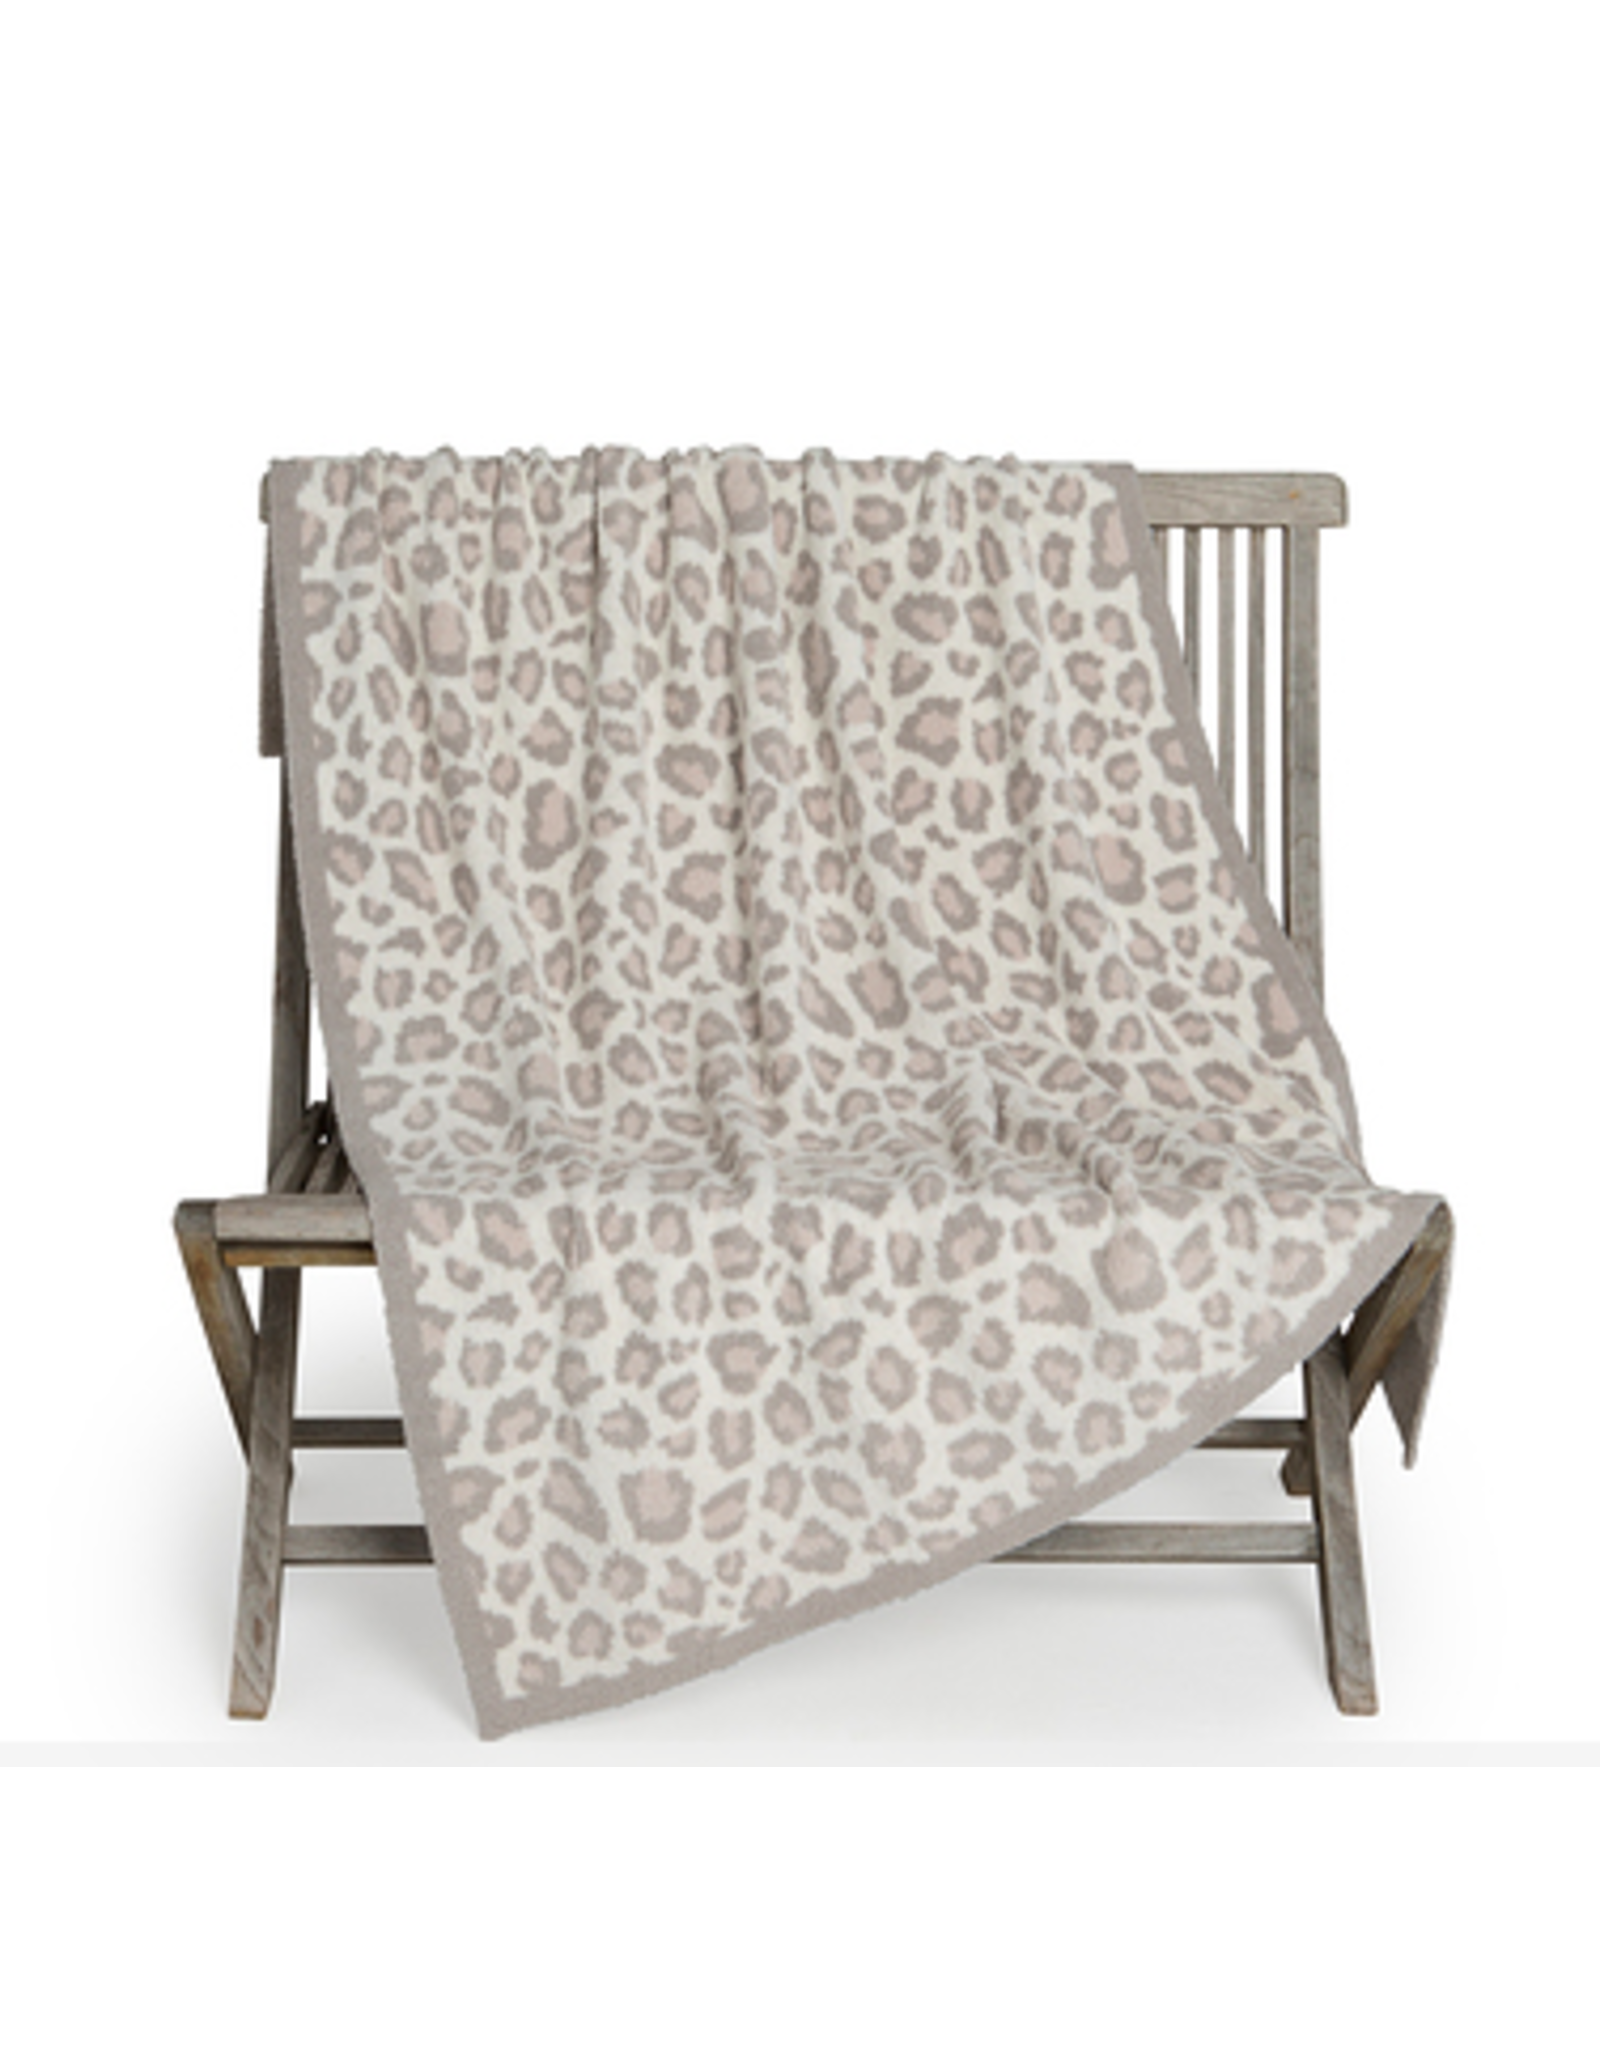 Barefoot Dreams CozyChic Safari Blanket in Cream Multi